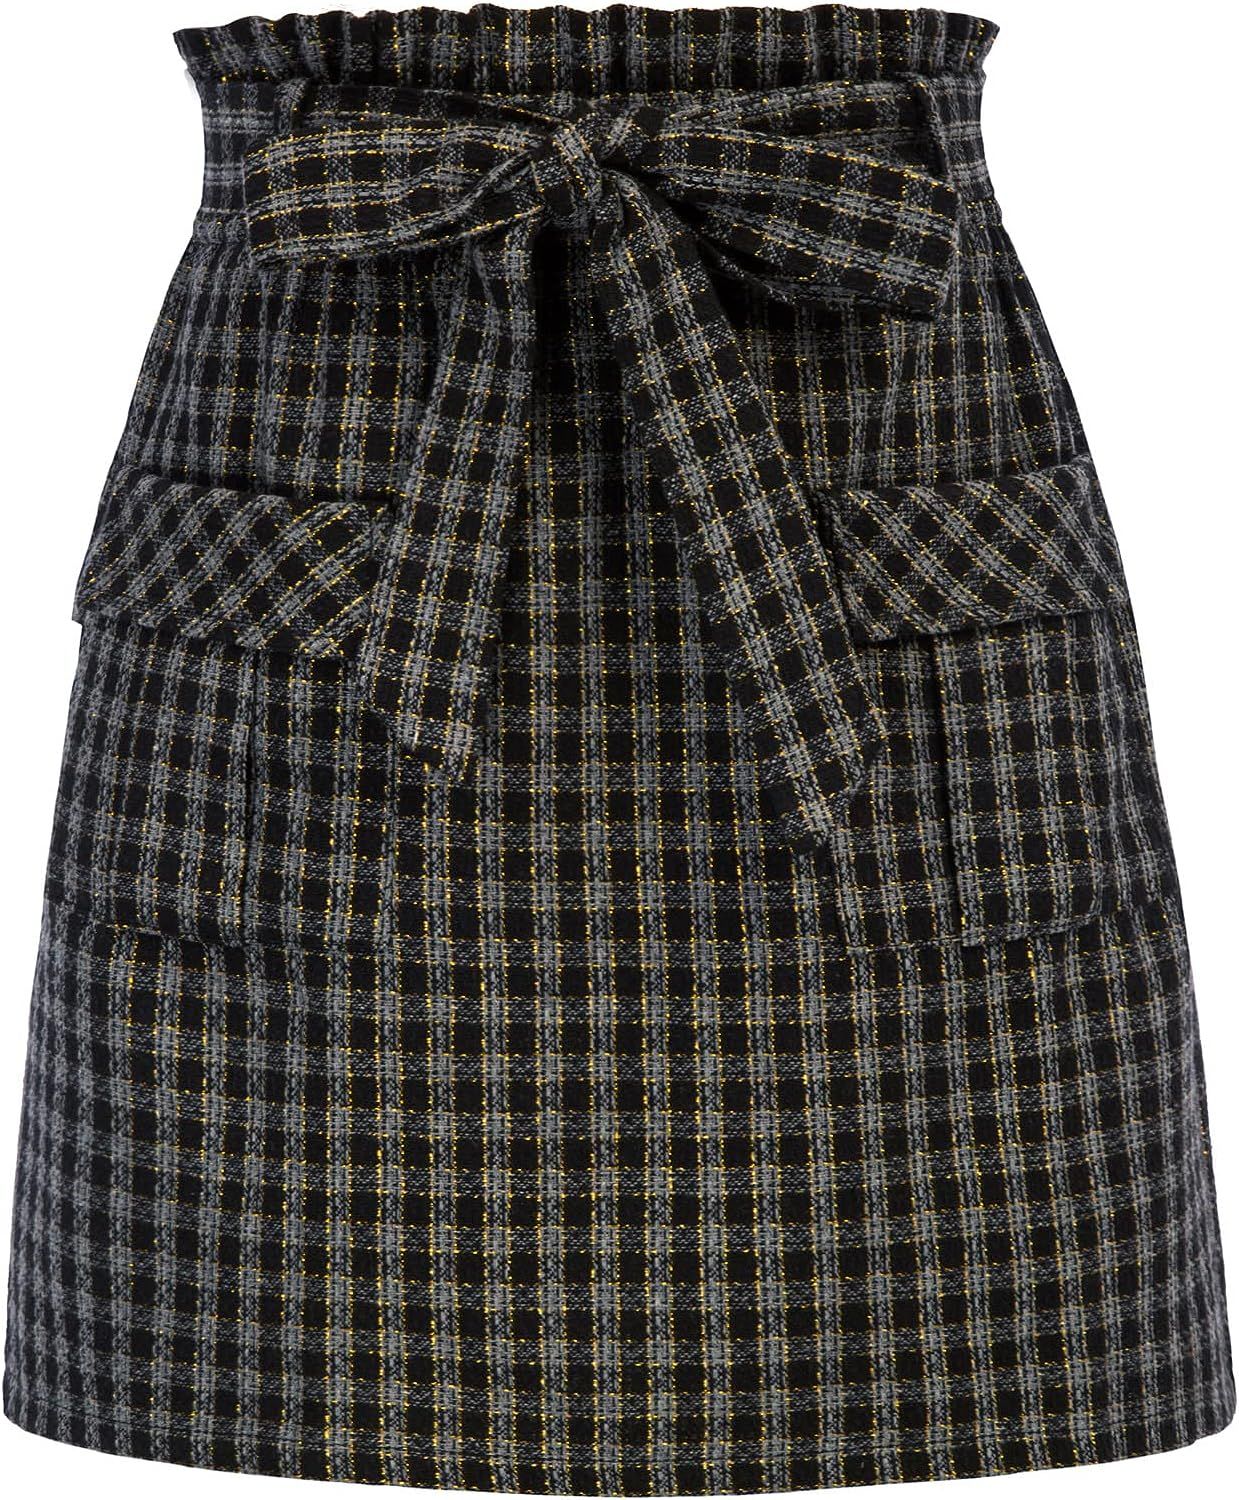 KANCY KOLE Women High Waist Paperbag Skirt Casual Short A-Line Skirts with Pockets S-XXL | Amazon (US)